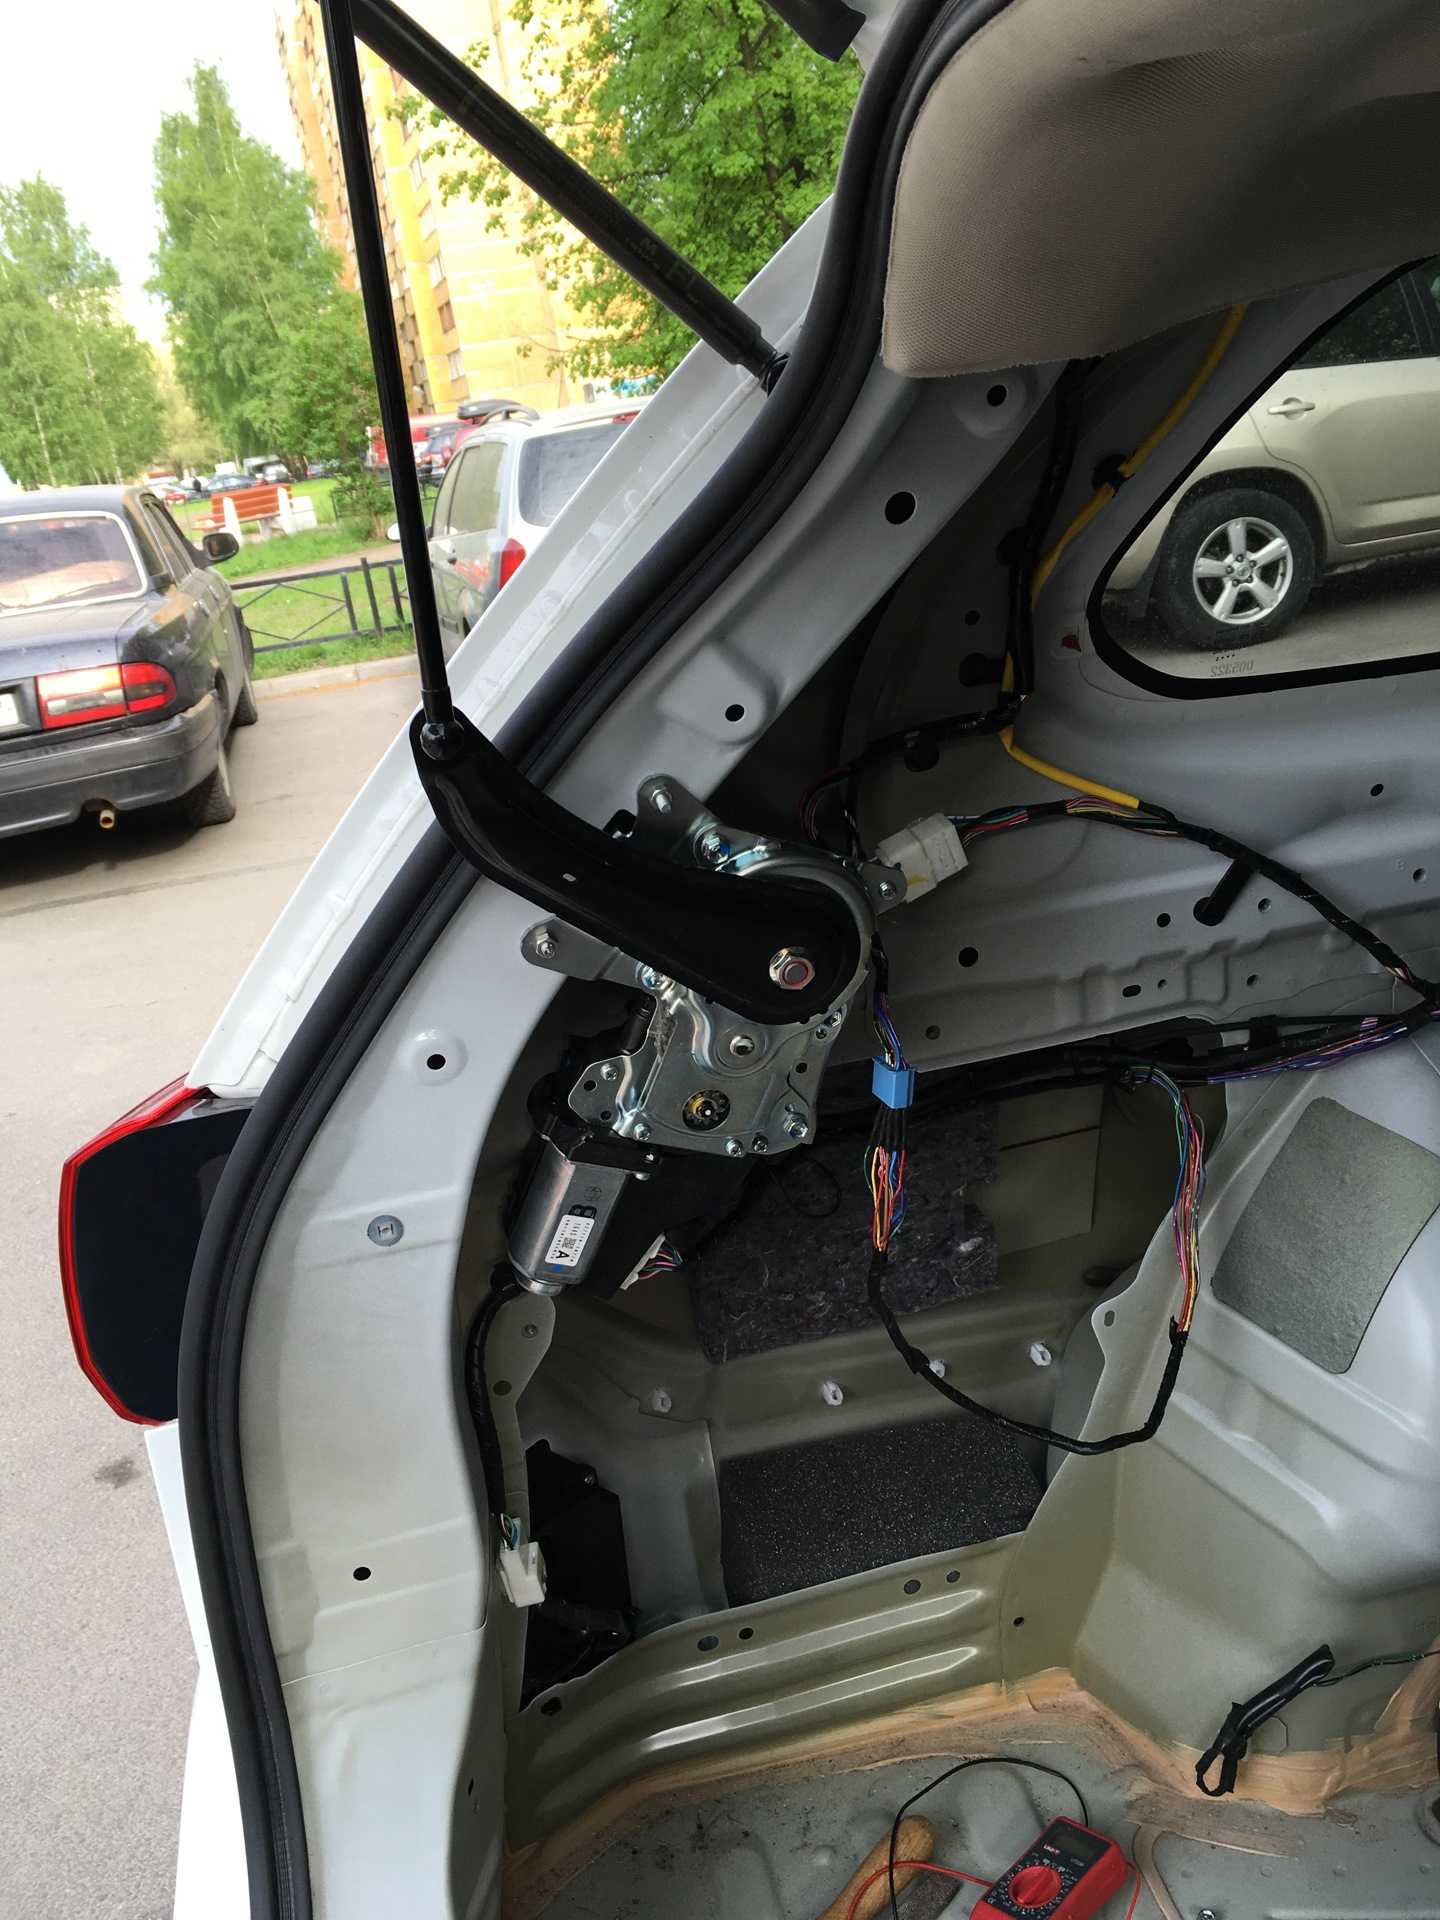 Электропривод крышки багажника: установка своими руками